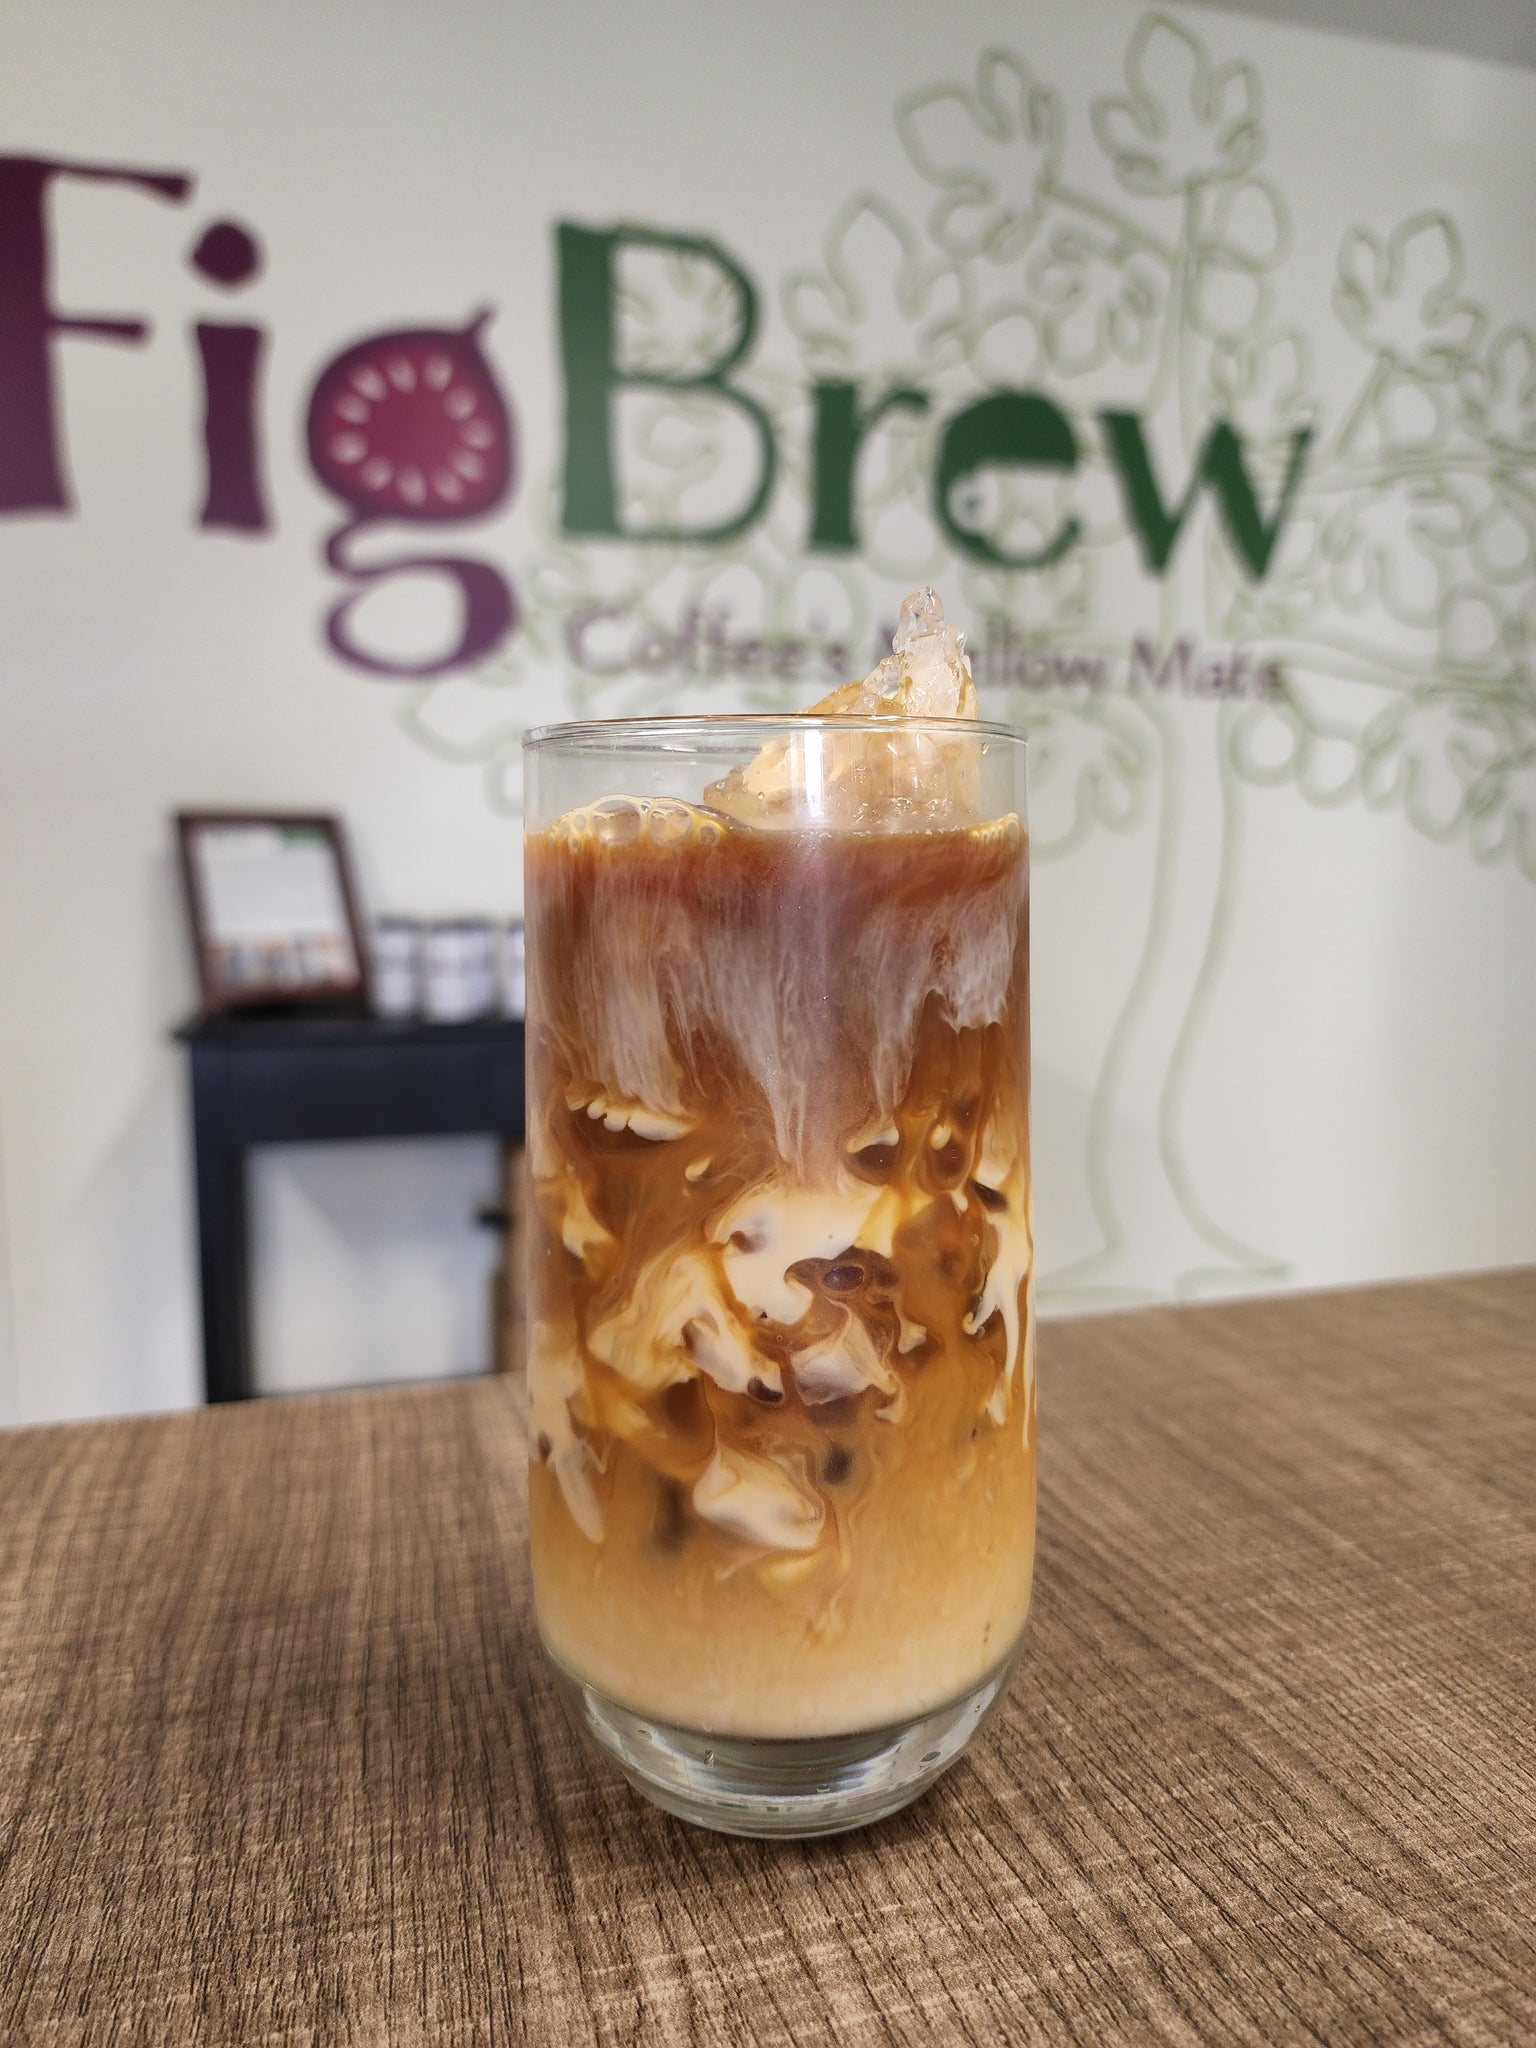 Iced Figbrew coffee alternative beverage with oat milk.